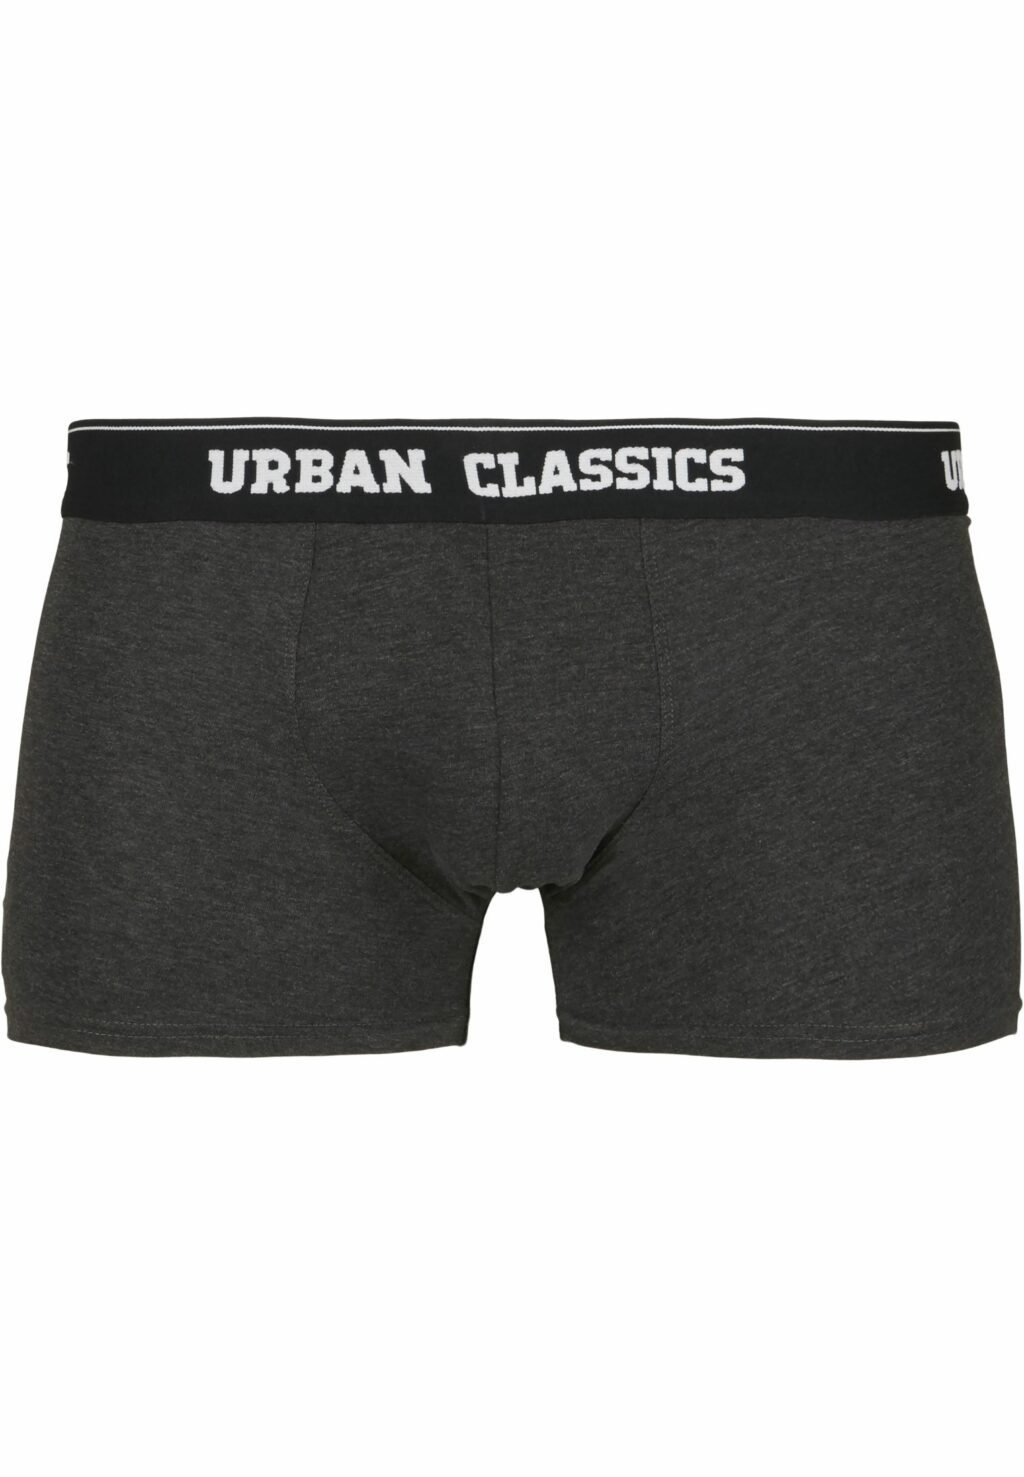 Urban Classics Men Boxer Shorts 2-Pack black/charcoal TB1277